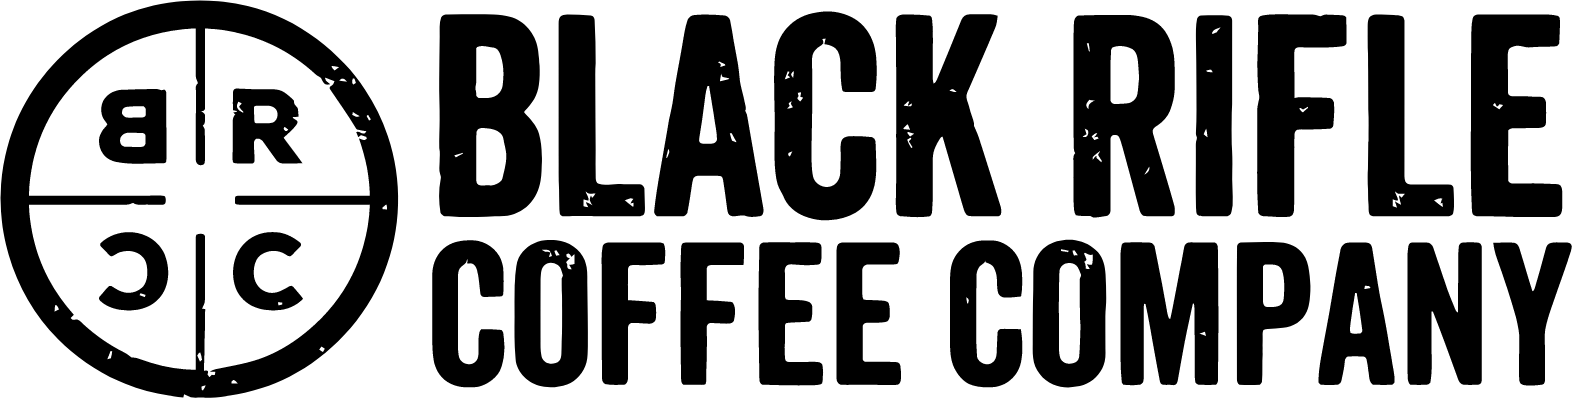 Black Rifle Coffee (BRC) logo large (transparent PNG)